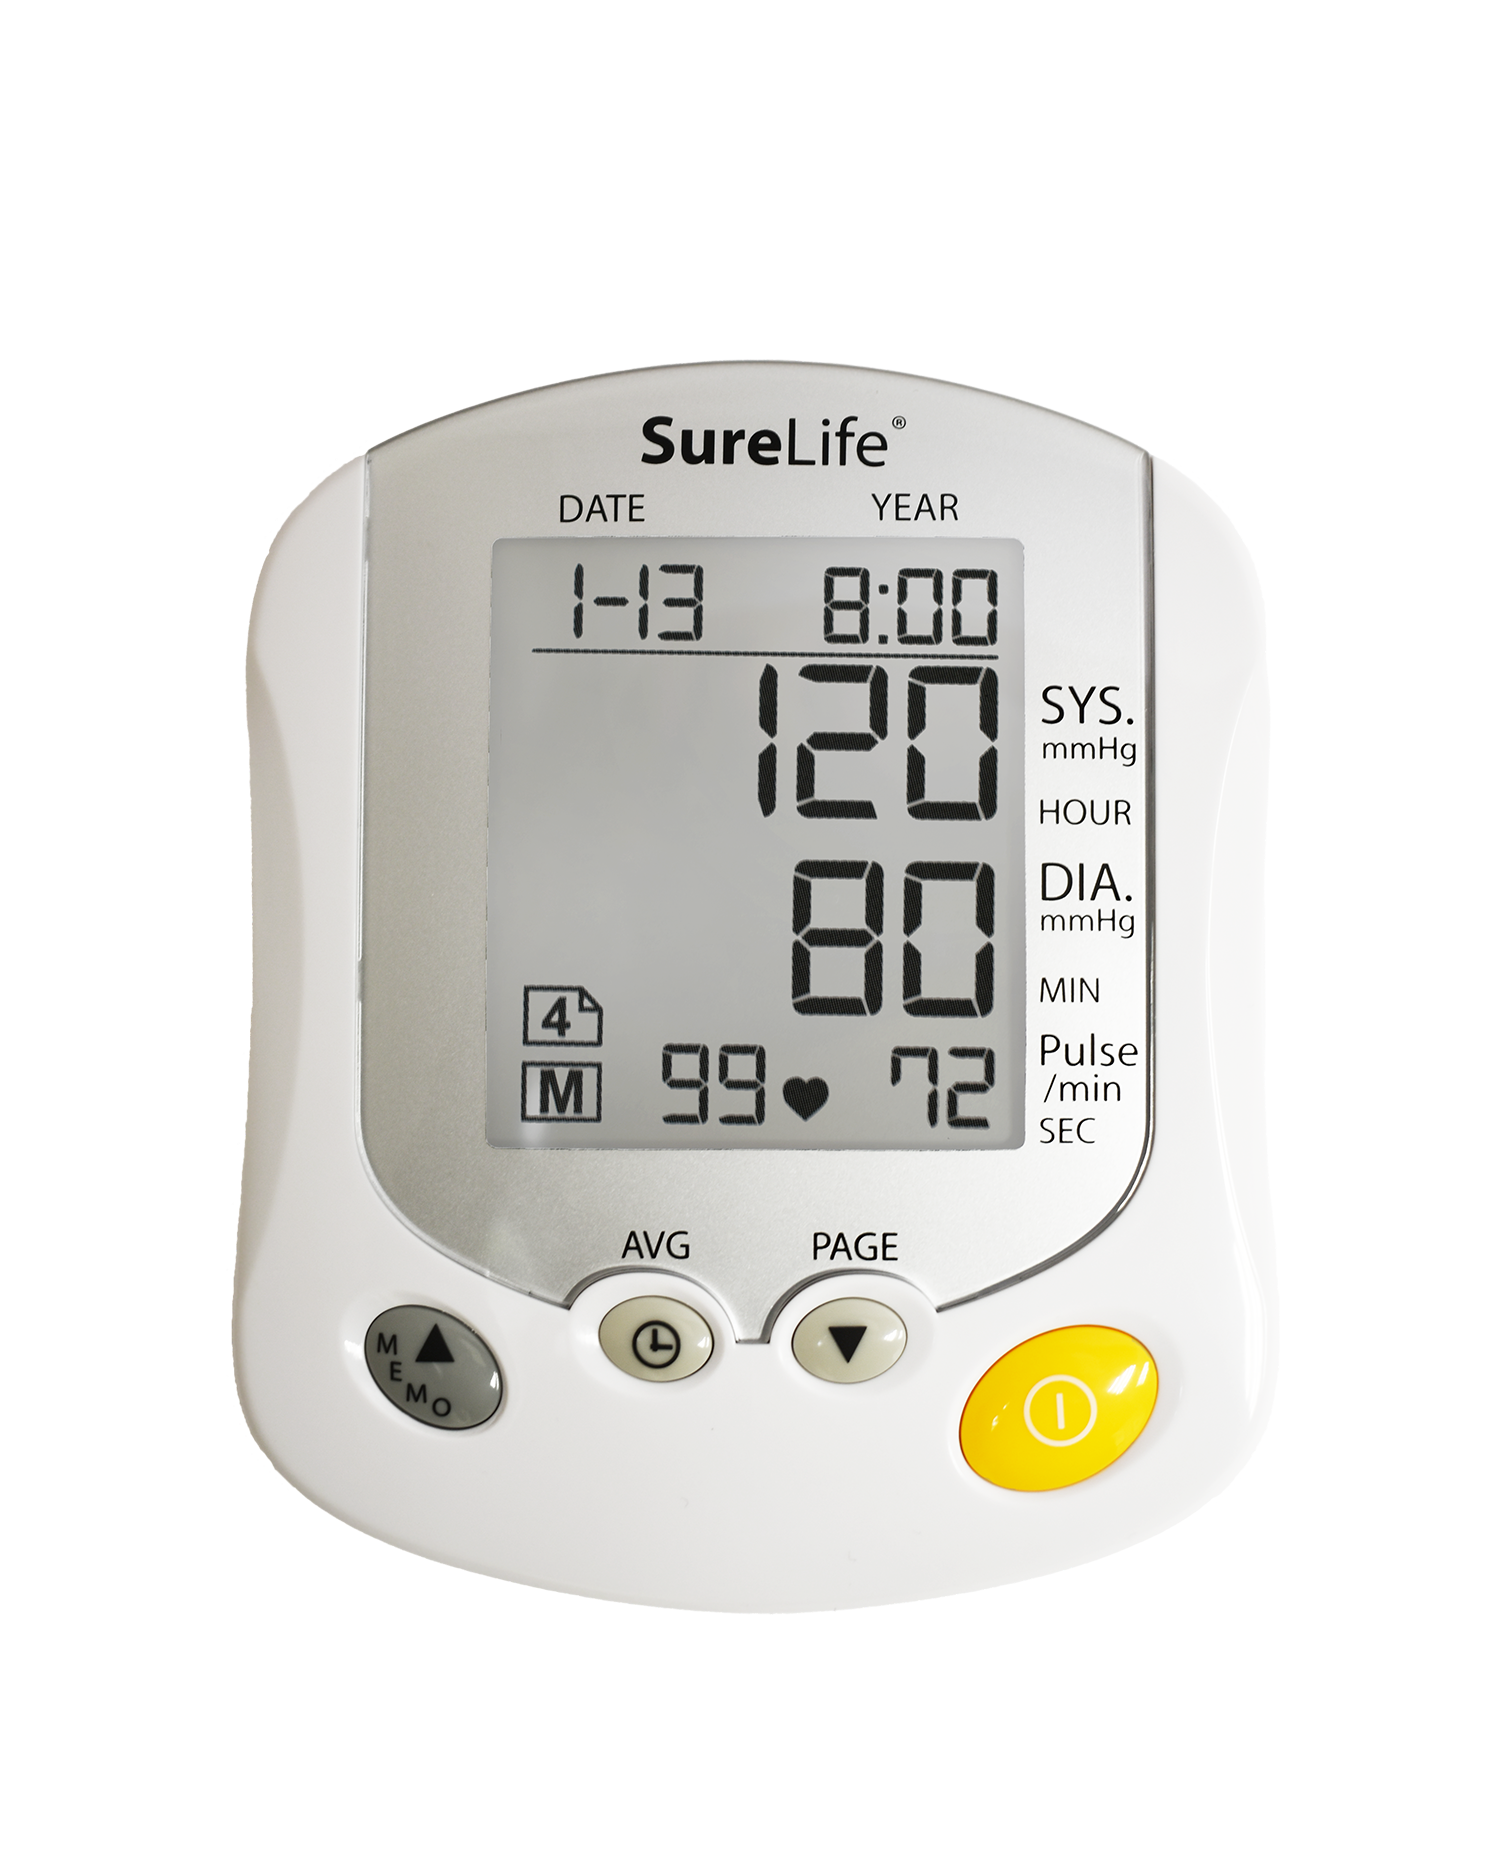 SureLife® Premium Arm Blood Pressure Monitor (Talking)